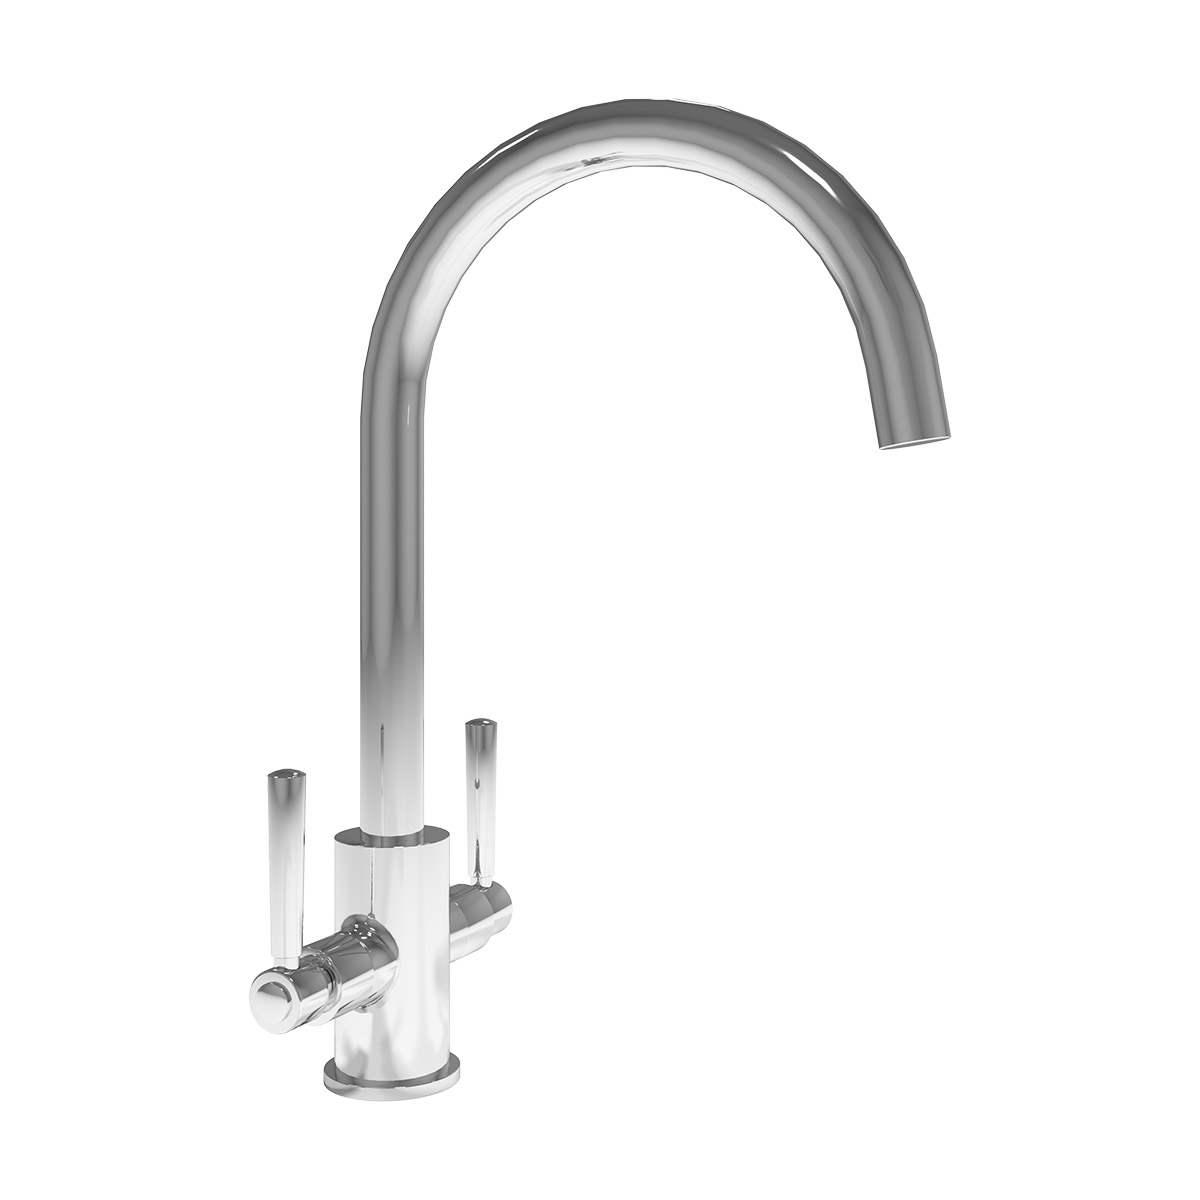 Noa dual lever kitchen tap in chrome